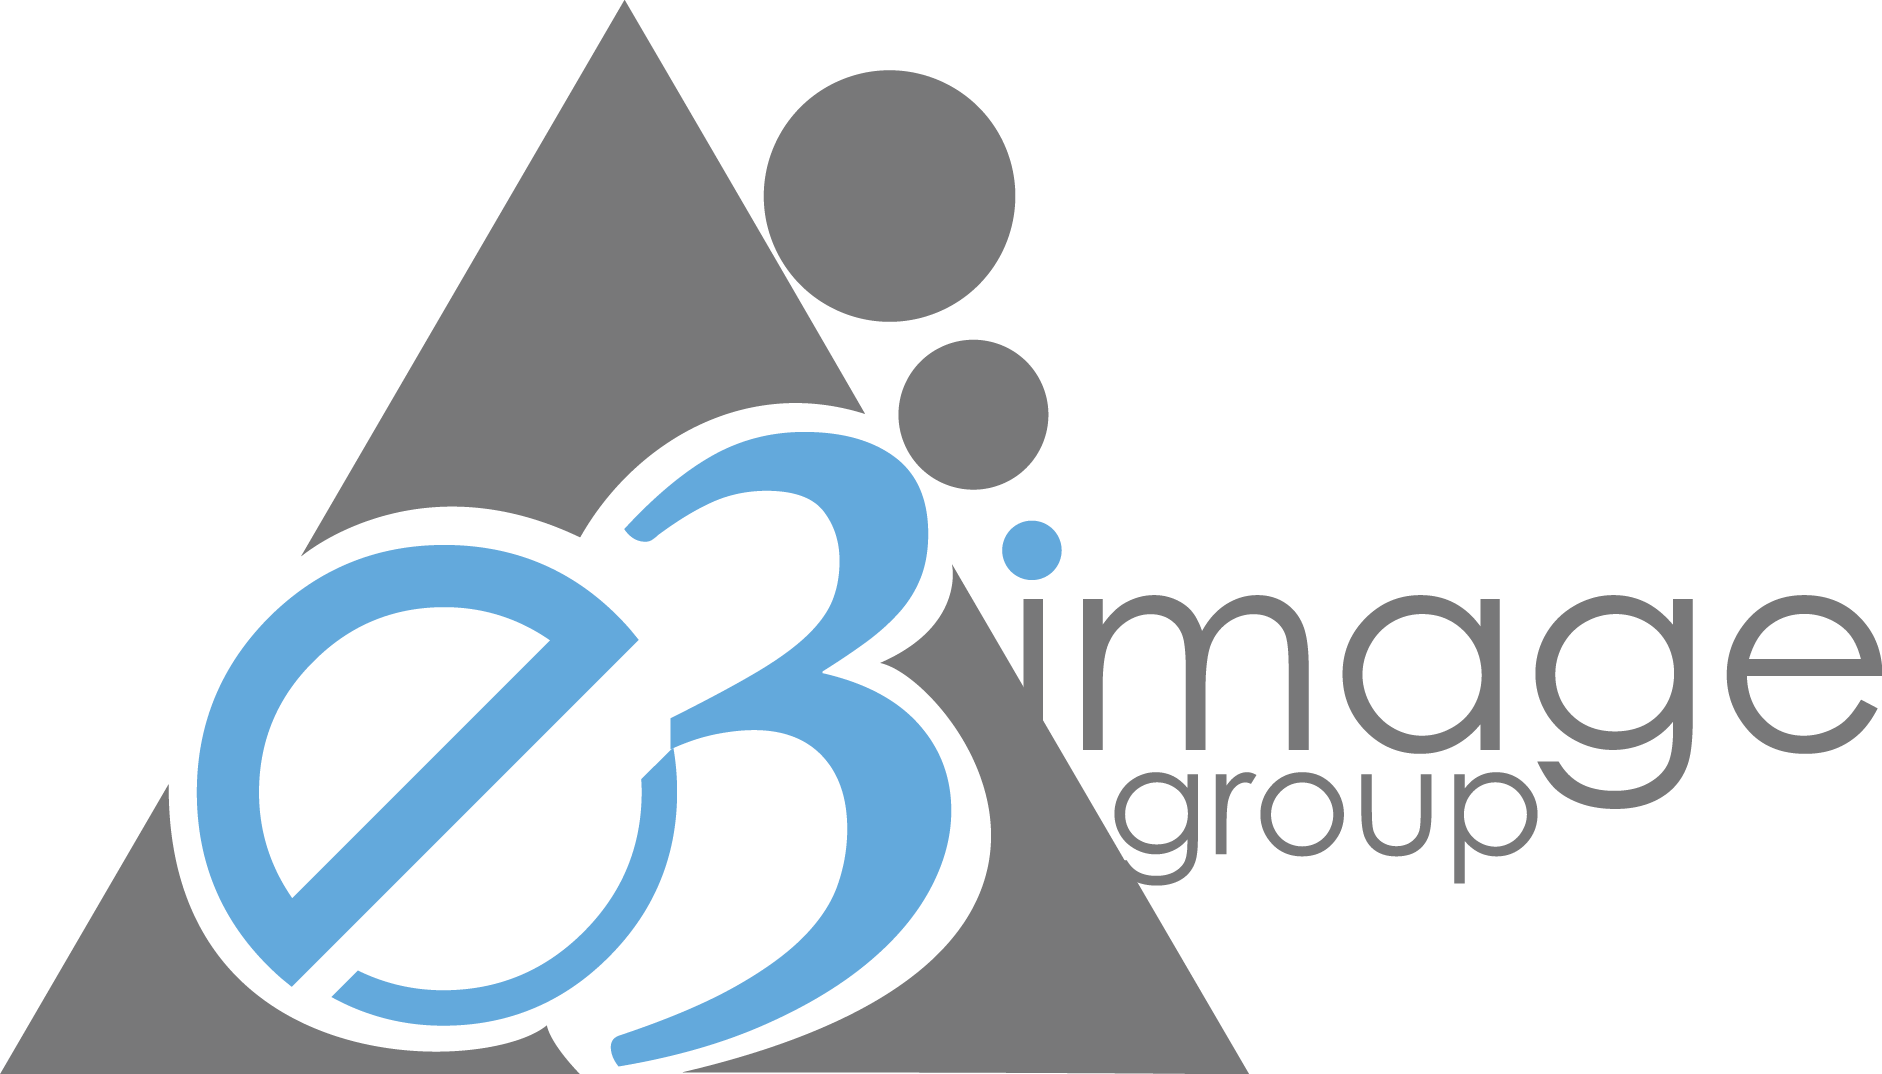 E3ImgGrp_Logo.png